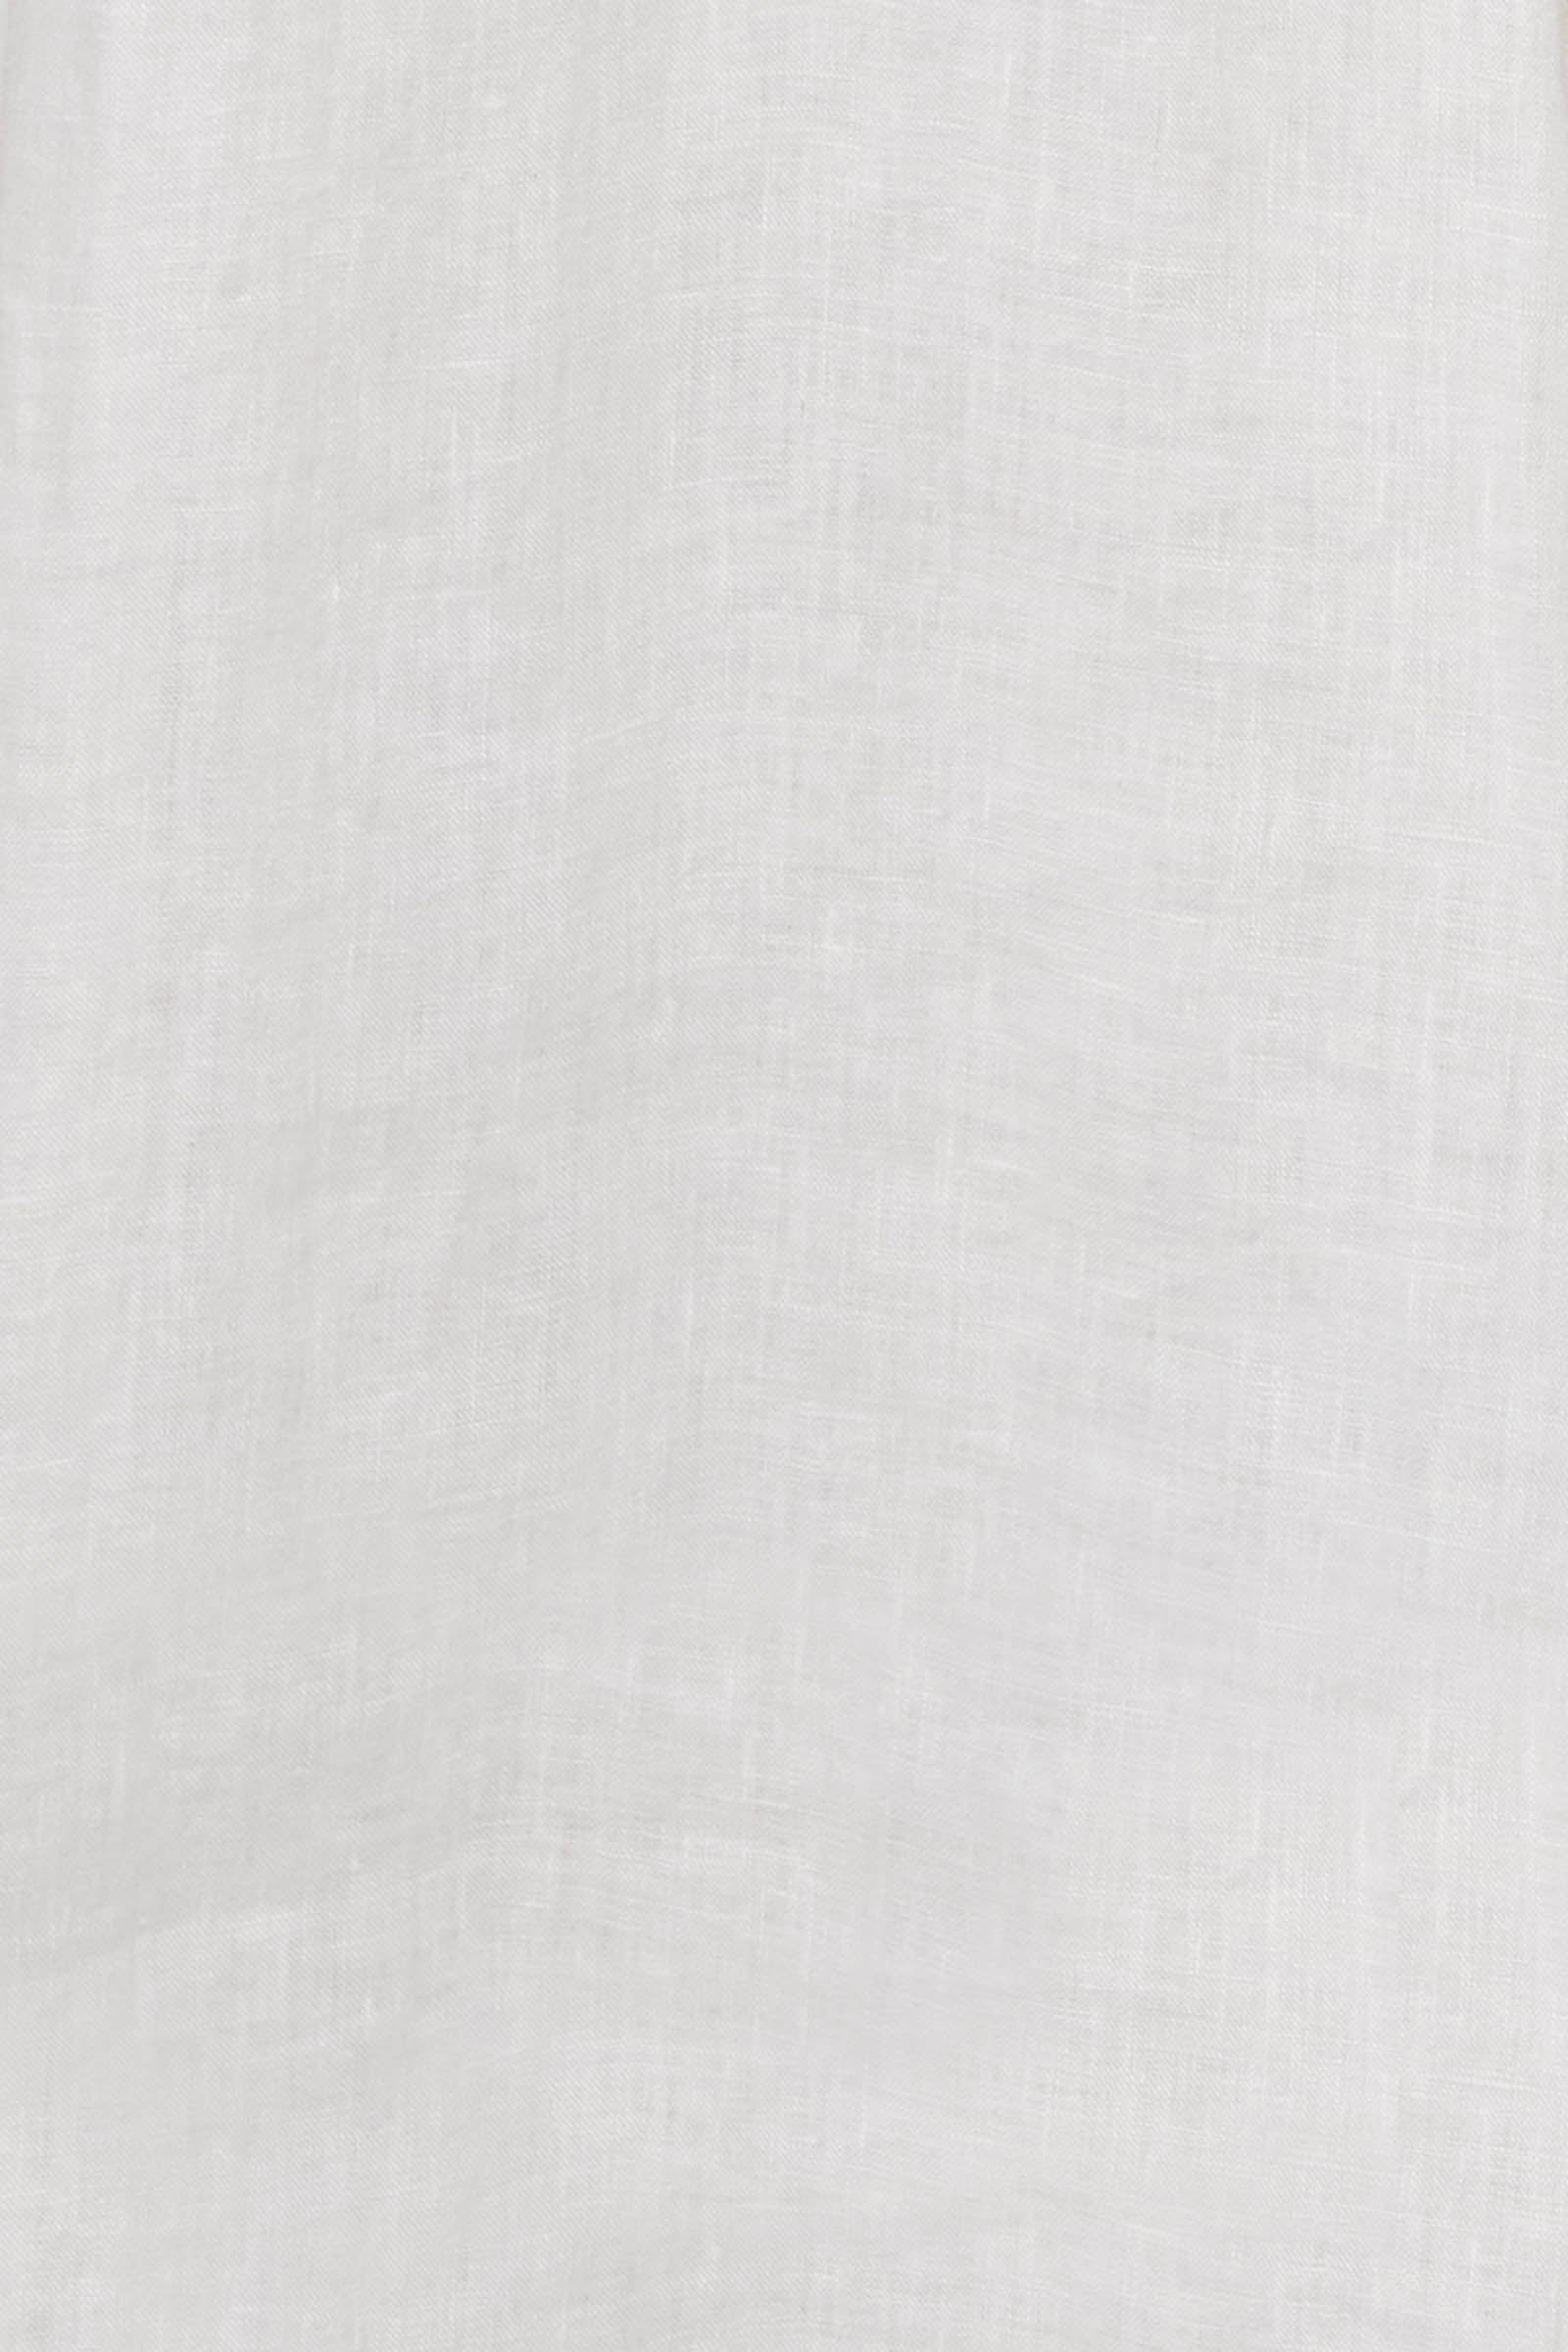 La Vie Pintuck Pant - Blanc - eb&ive Clothing - Pant Relaxed Linen